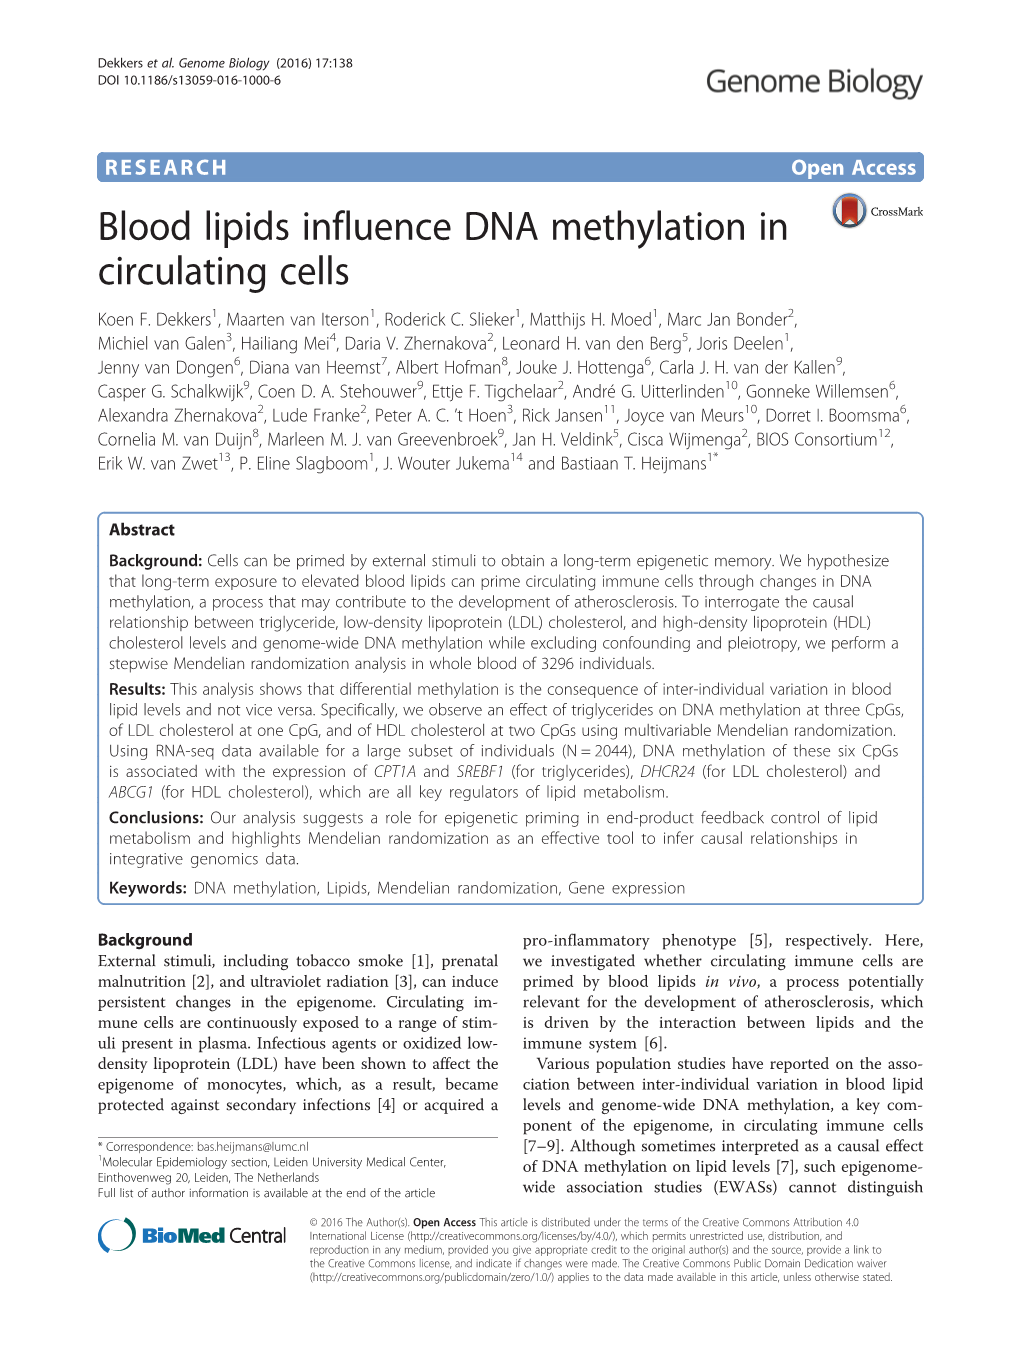 Blood Lipids Influence DNA Methylation in Circulating Cells Koen F